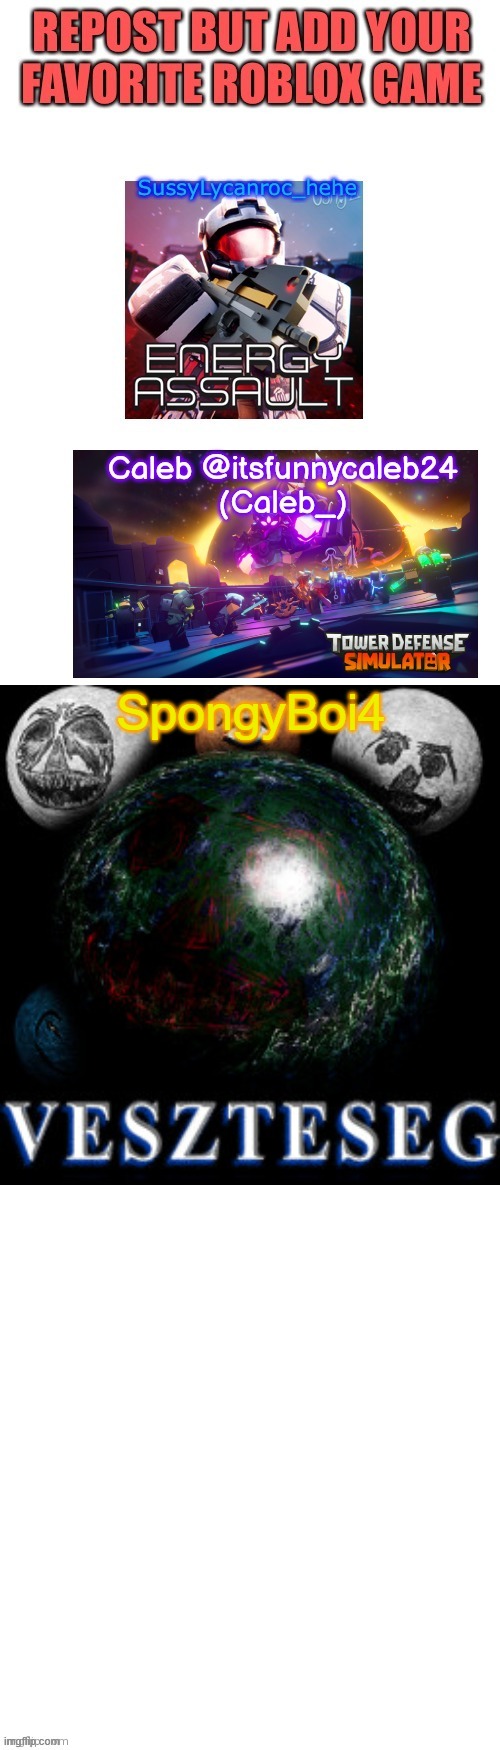 Repost By Adding Ur Favorite Game Lol | SpongyBoi4 | image tagged in roblox,veszteseg | made w/ Imgflip meme maker